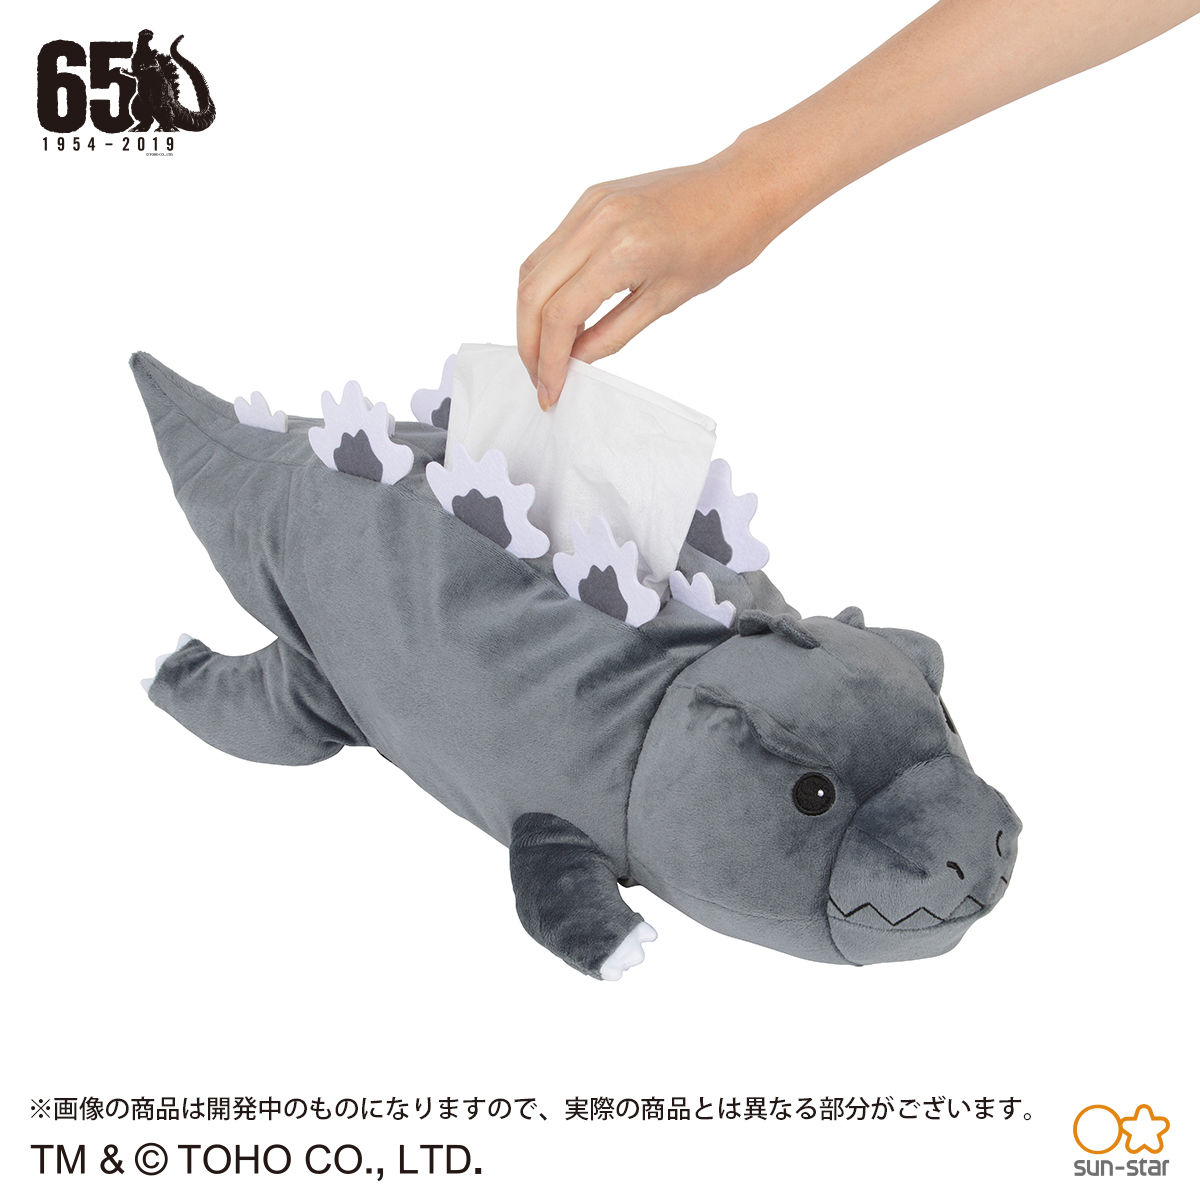 Heisei Godzilla BOX Tissue Case 